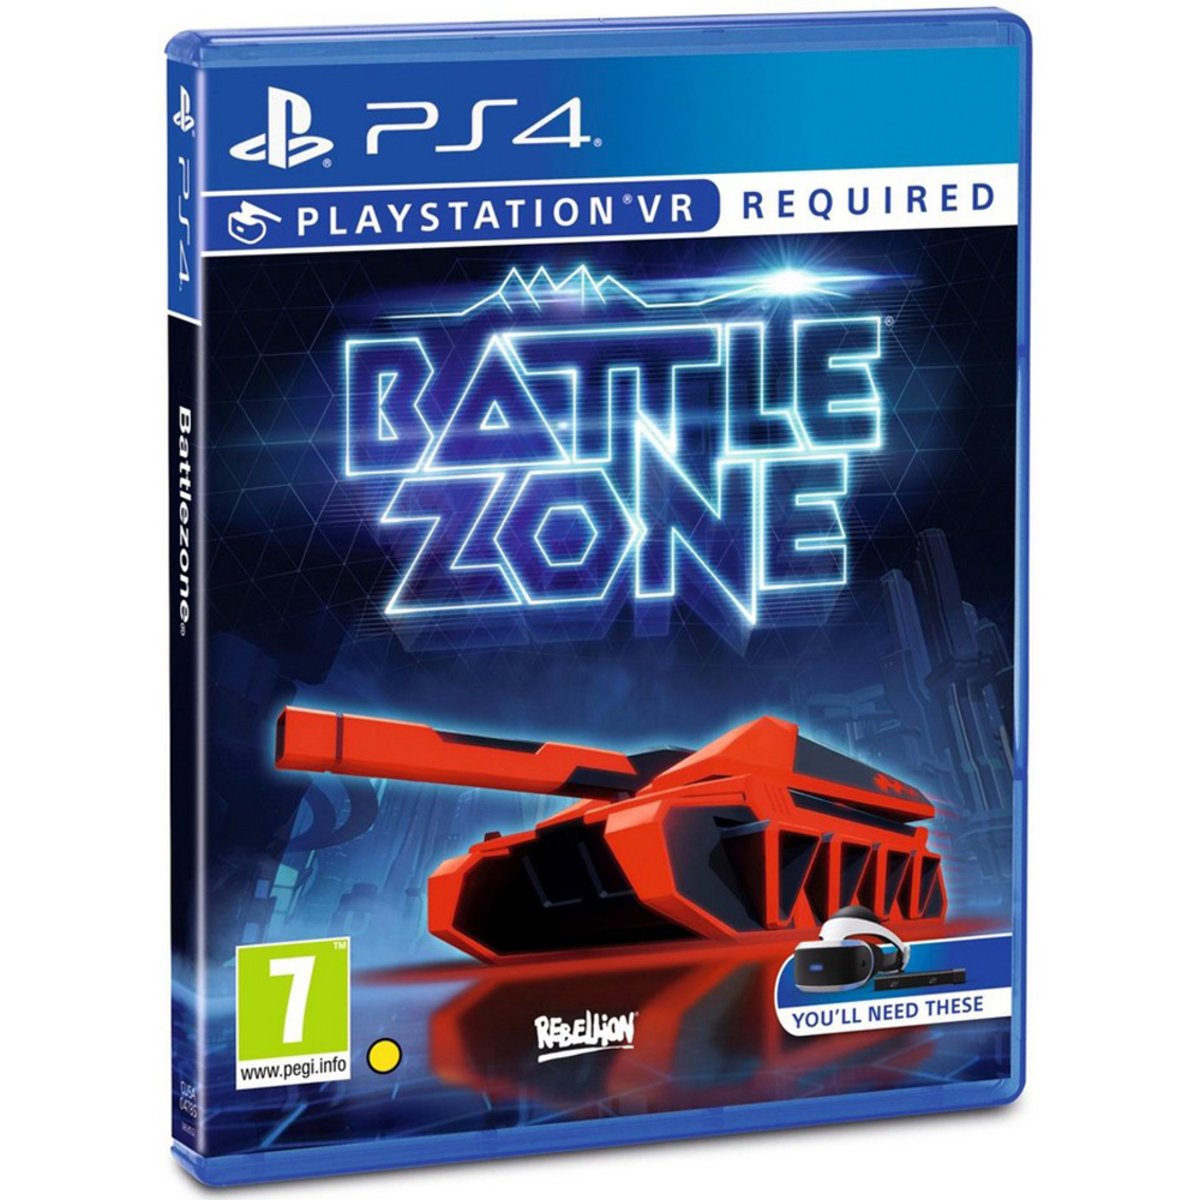 PS4 VR Battlezone